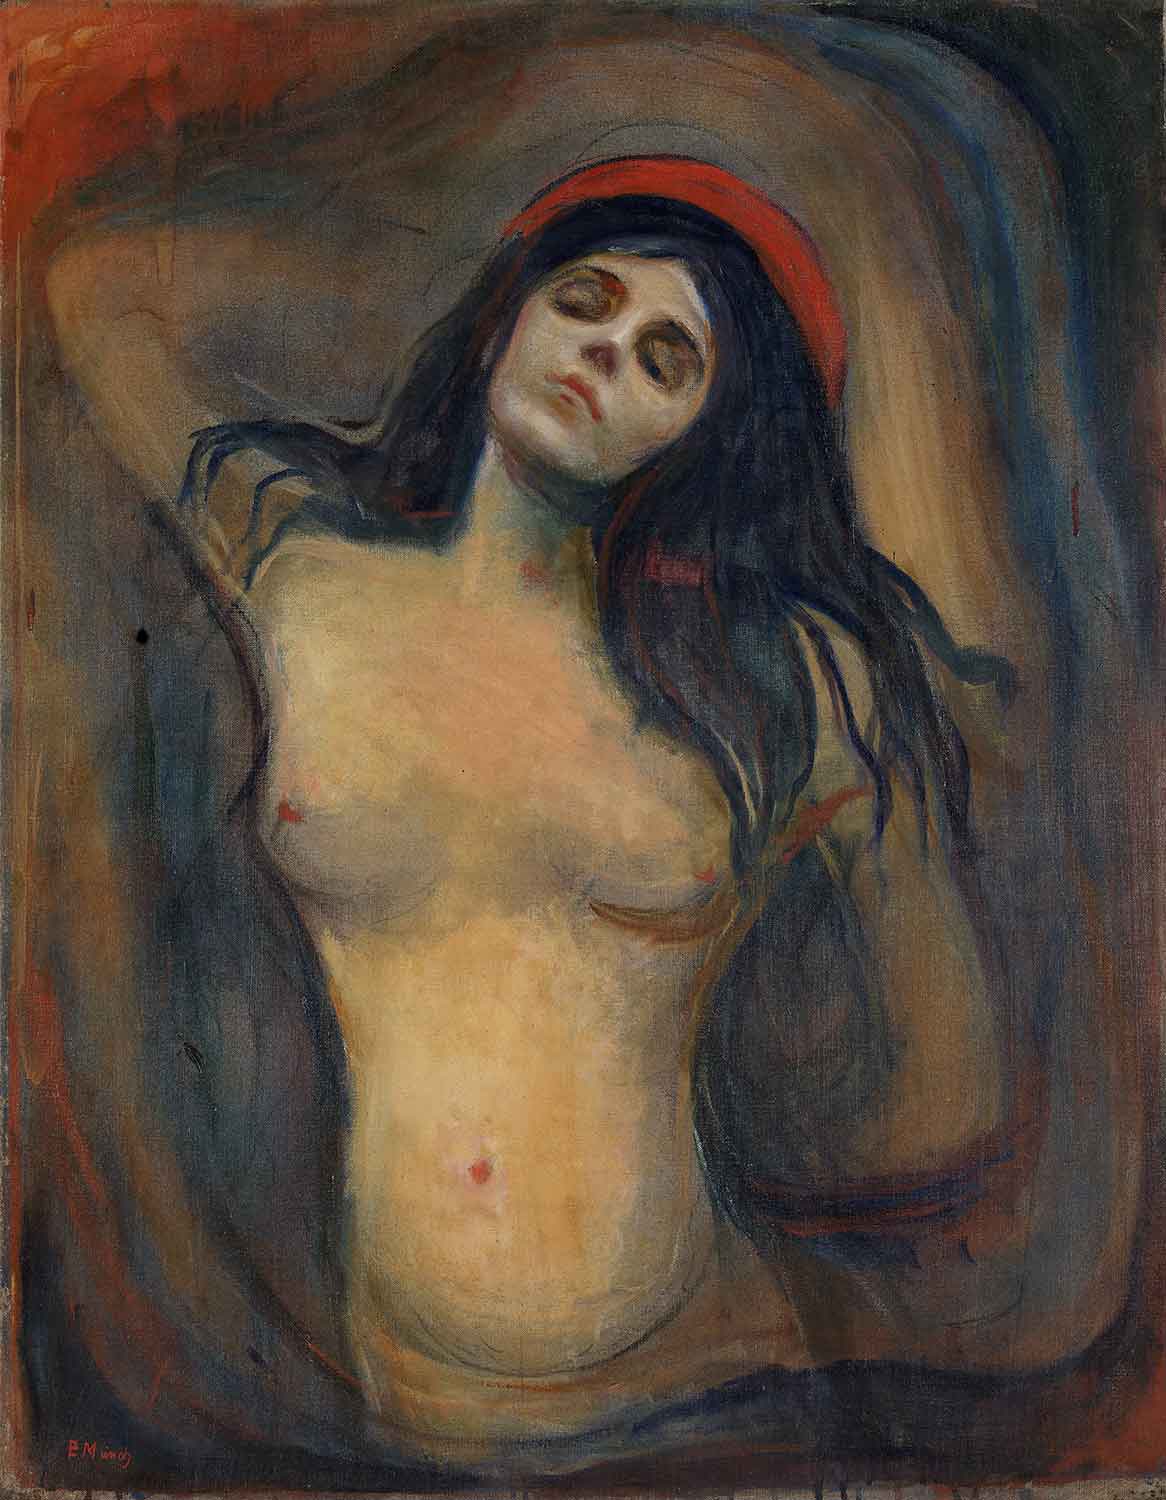 Madonna, de Edvard Munch